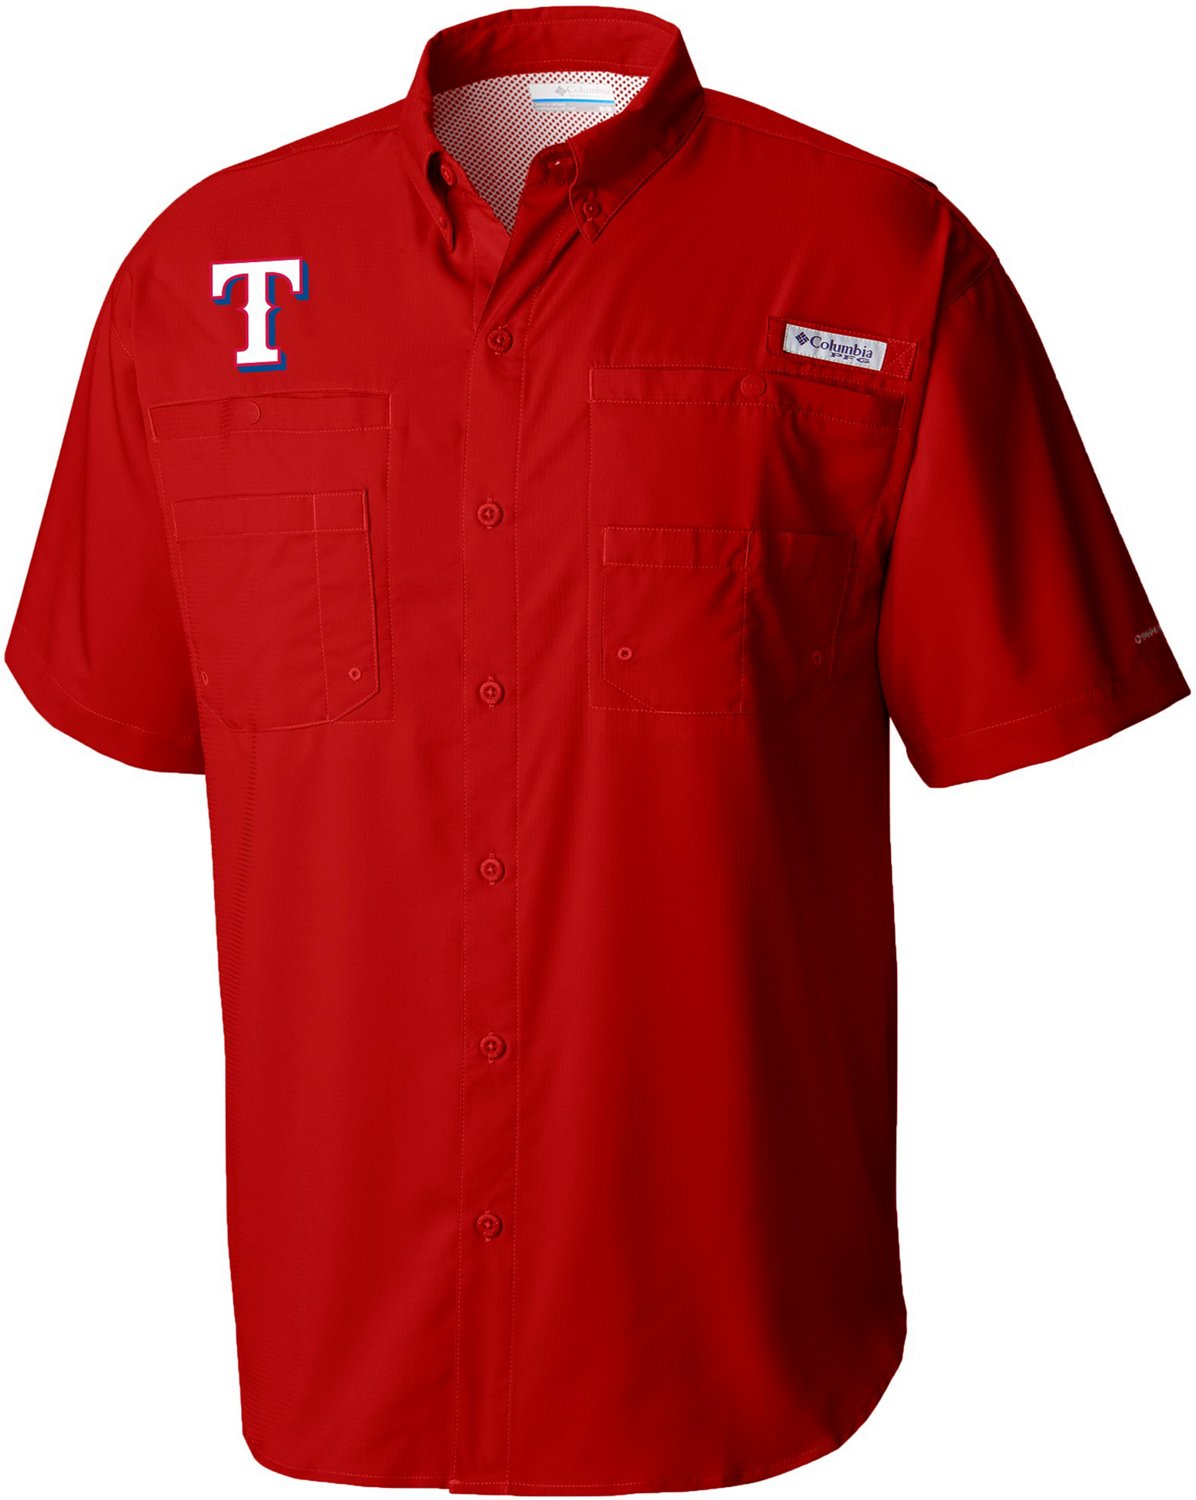 texas rangers shirt academy